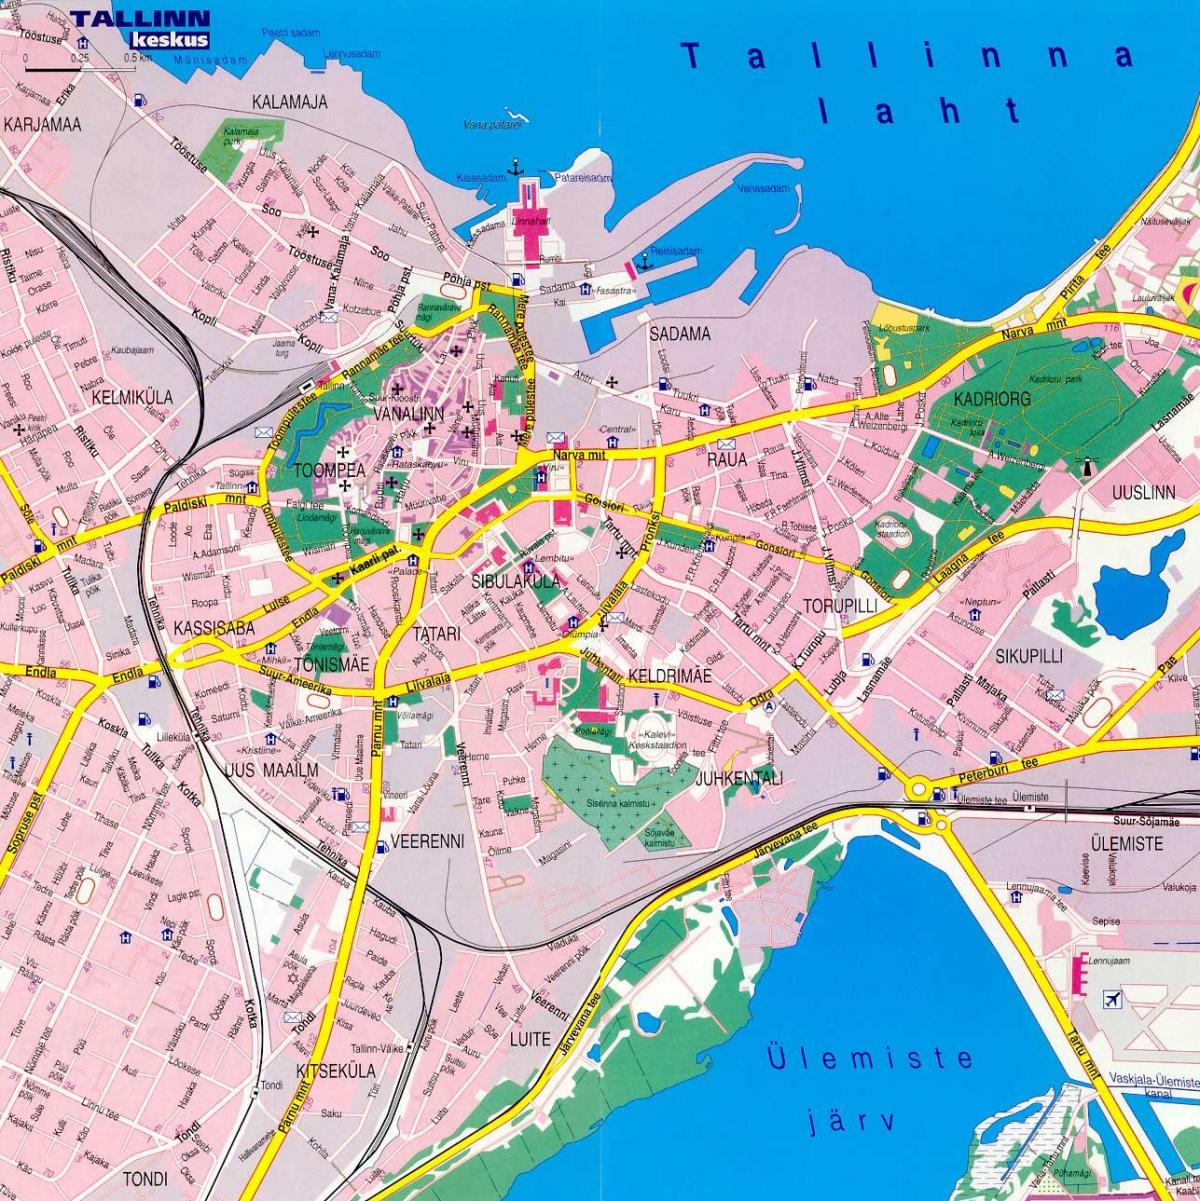 zemljevid talinu, Estonija 